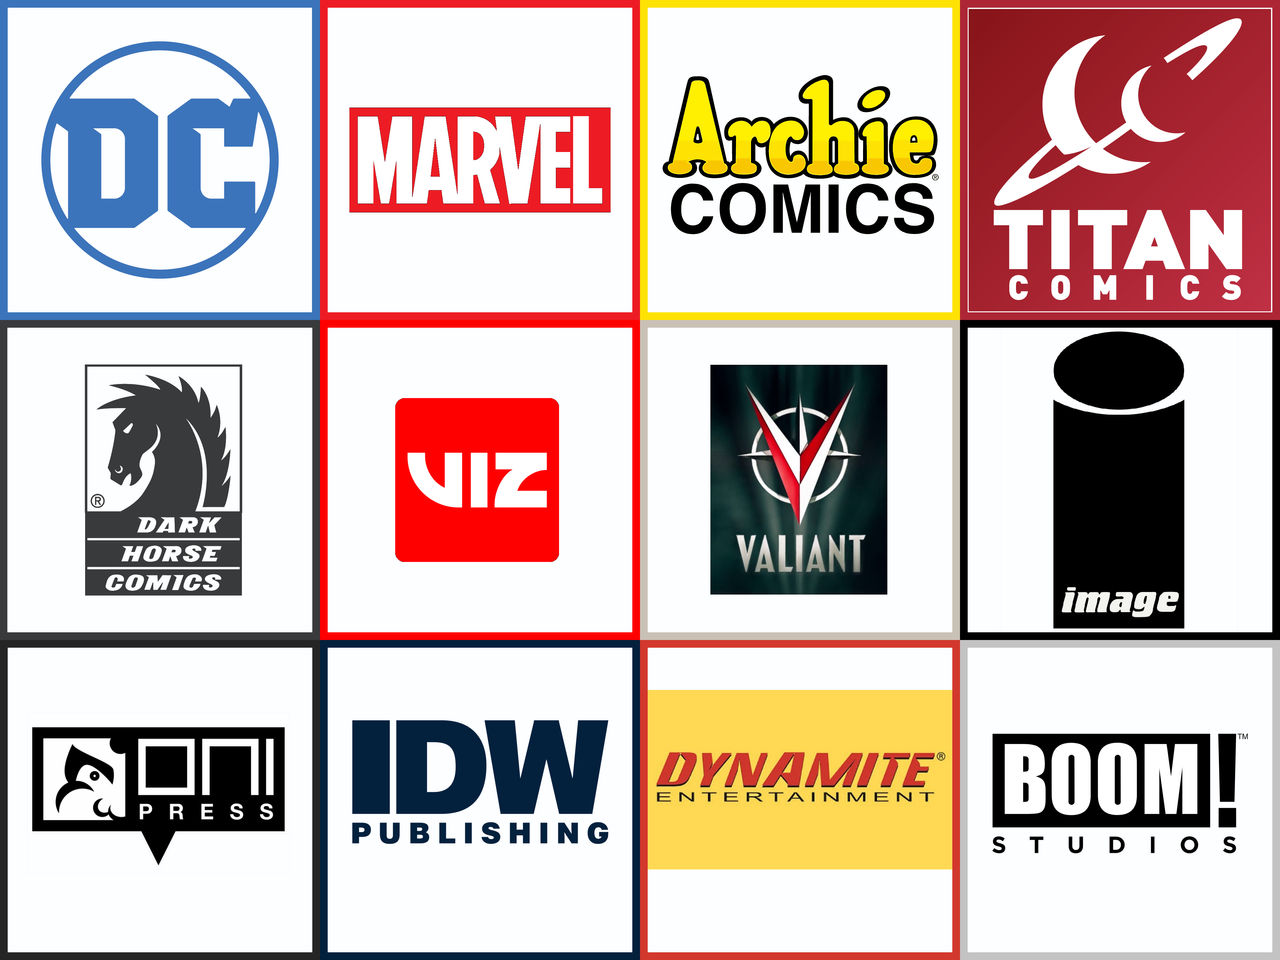 Major Comic Book Publishers by AdrenalineRush1996 on DeviantArt